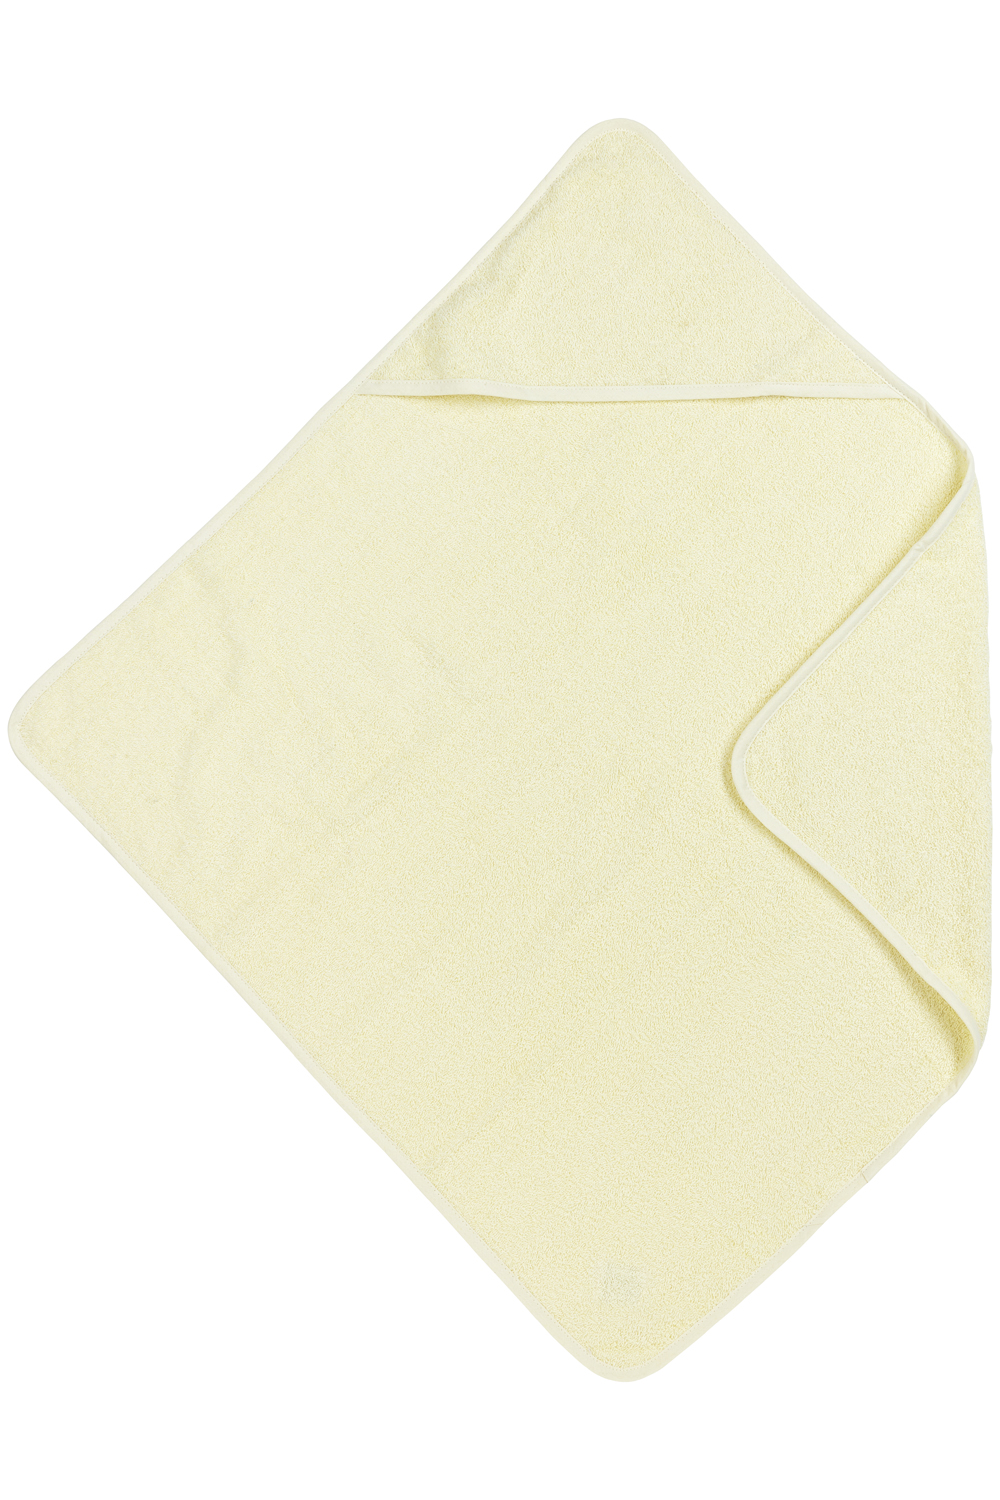 Bathcape terry Uni - soft yellow - 75x75cm